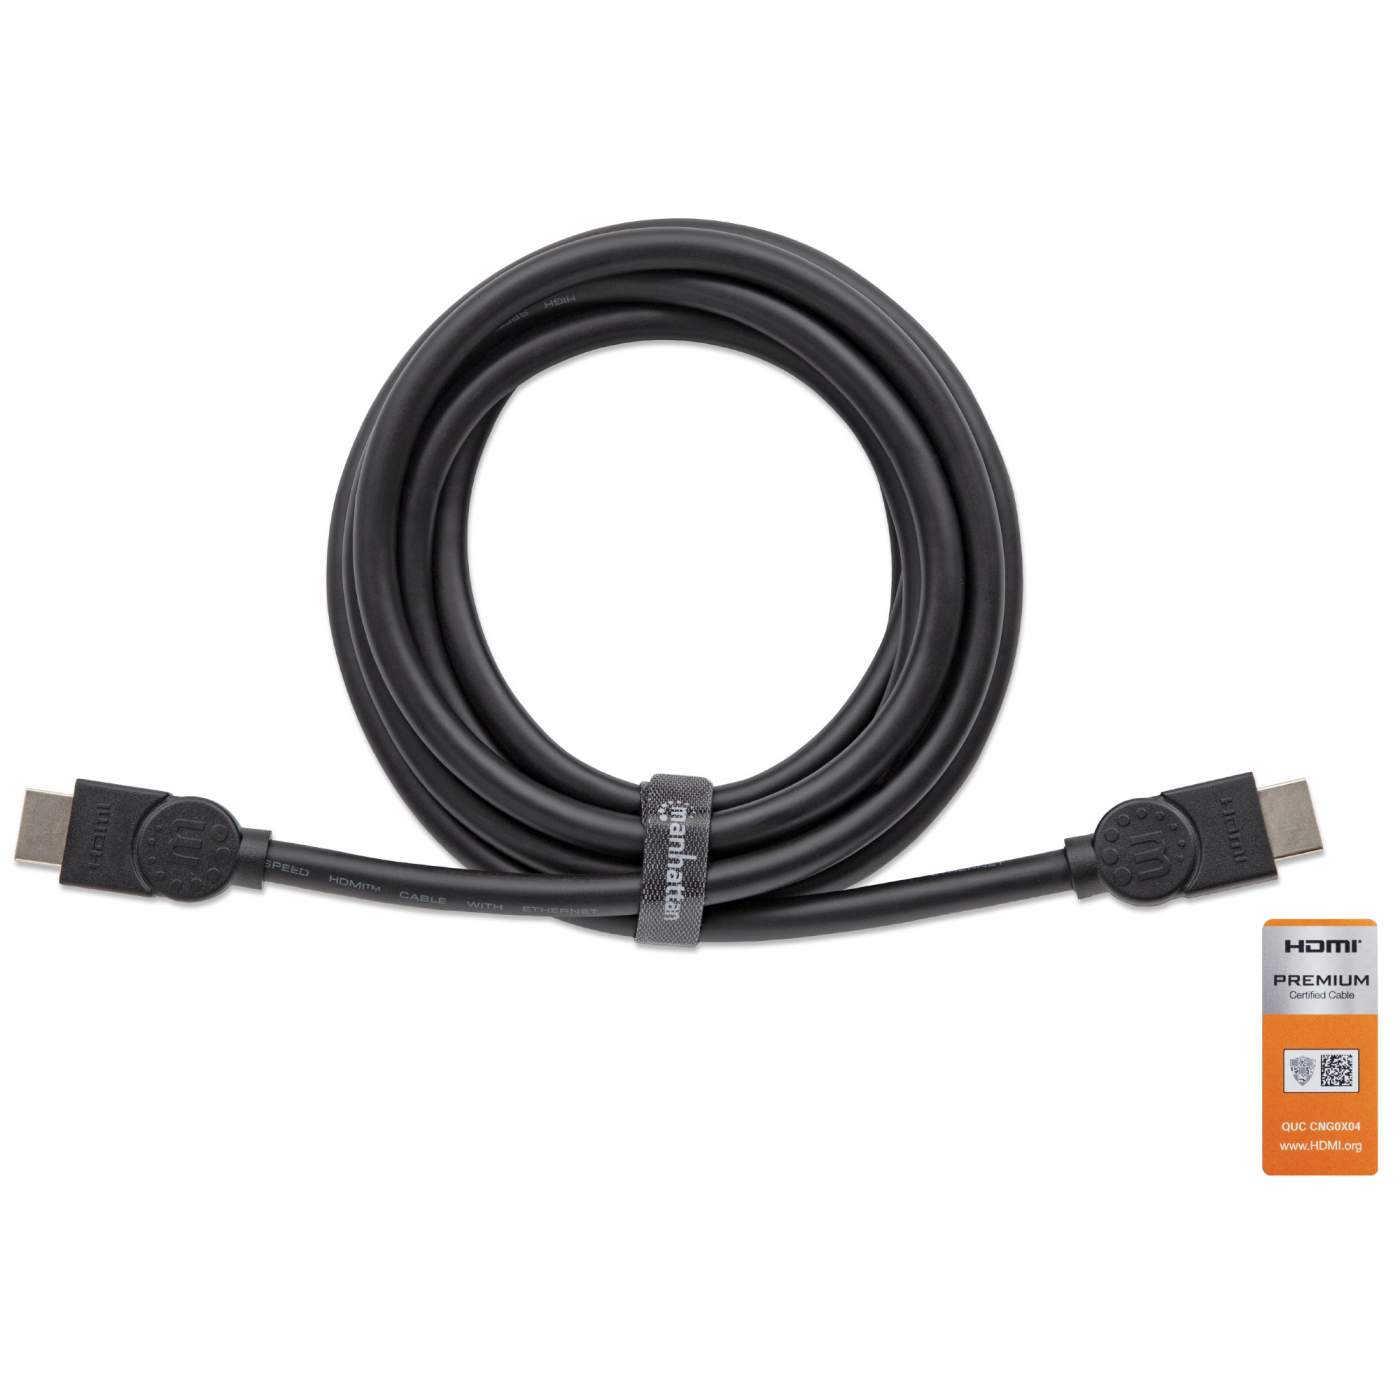 KabelDirekt Pro Series High Speed HDMI Kabel mit Ethernet ab 8,44